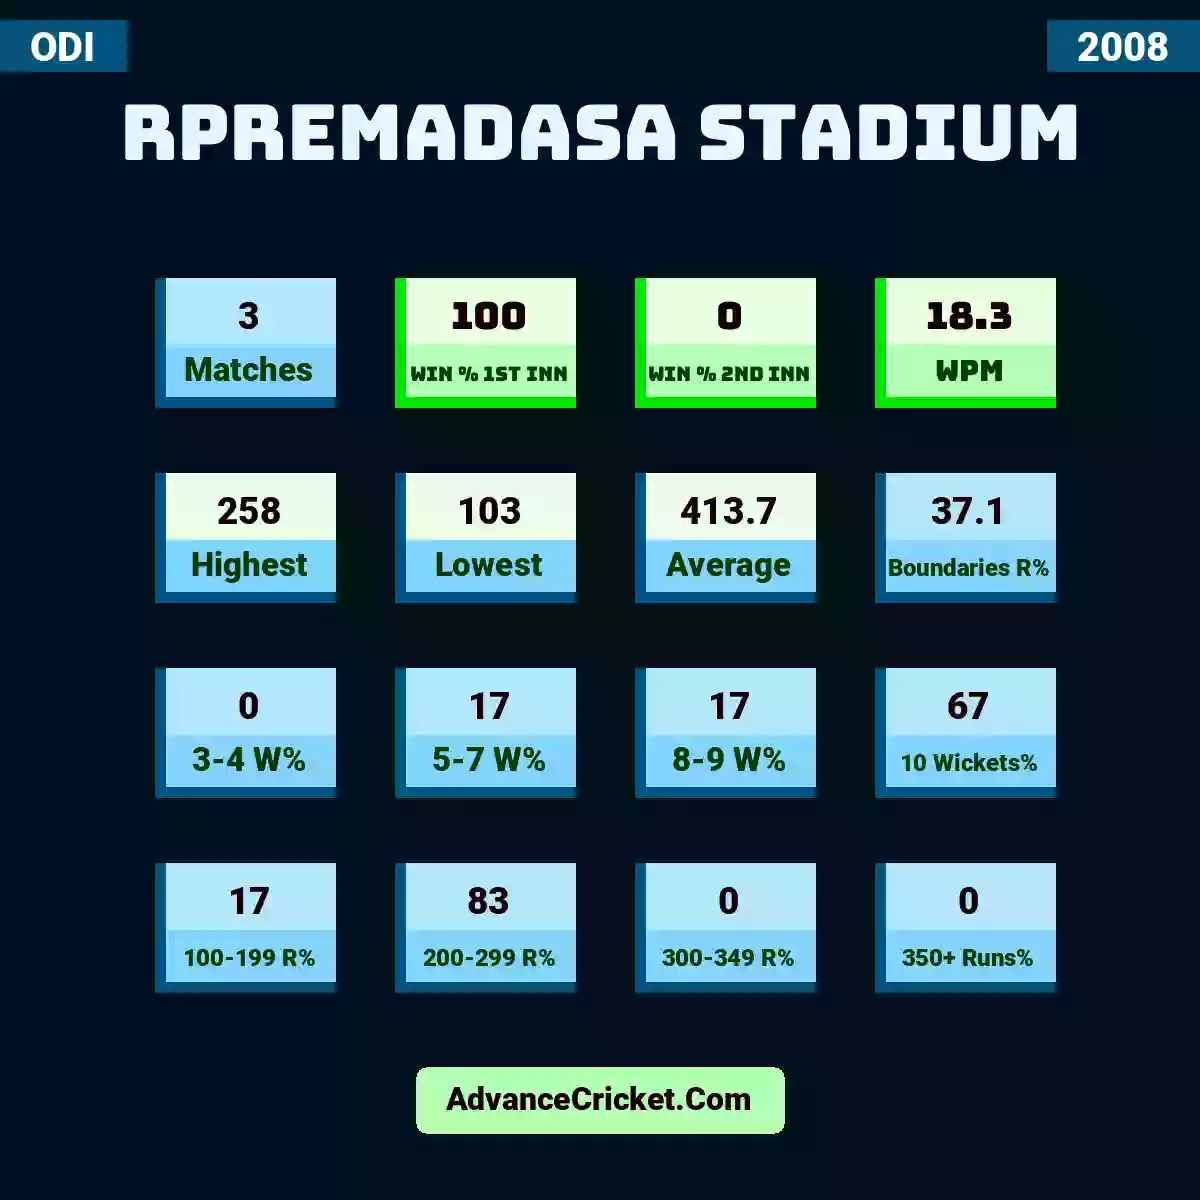 Image showing RPremadasa Stadium with Matches: 3, Win % 1st Inn: 100, Win % 2nd Inn: 0, WPM: 18.3, Highest: 258, Lowest: 103, Average: 413.7, Boundaries R%: 37.1, 3-4 W%: 0, 5-7 W%: 17, 8-9 W%: 17, 10 Wickets%: 67, 100-199 R%: 17, 200-299 R%: 83, 300-349 R%: 0, 350+ Runs%: 0.